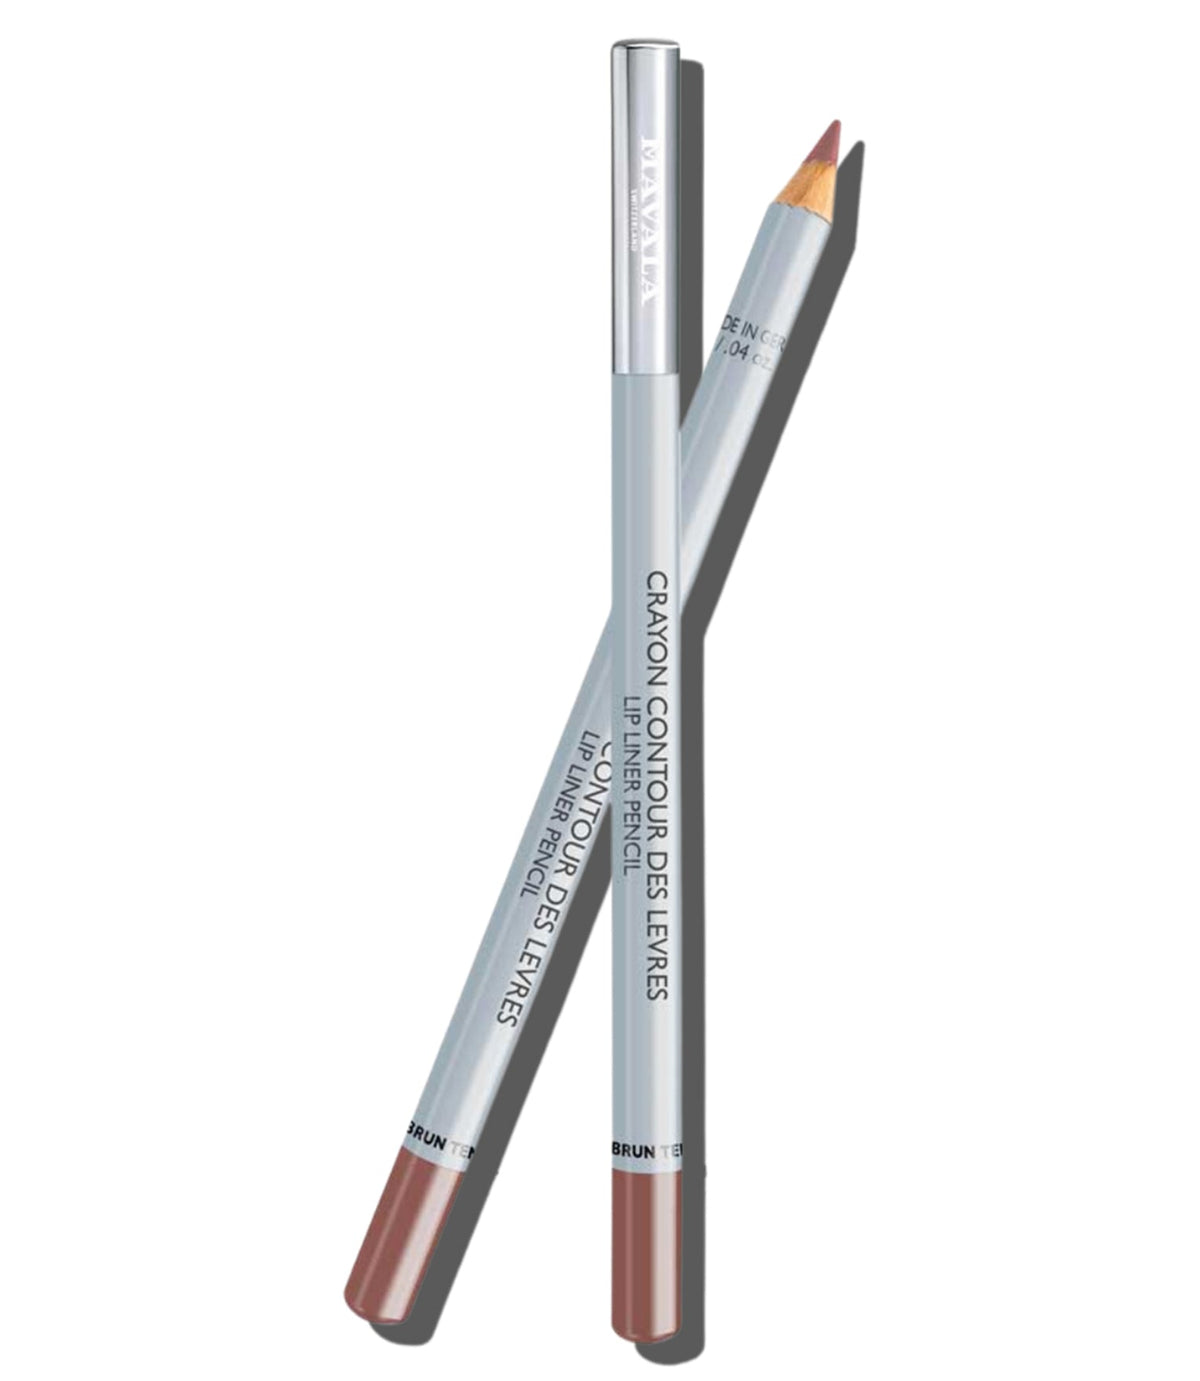 Lip Liner Pencil - Brun Tendre / Soft Brown 1.4g